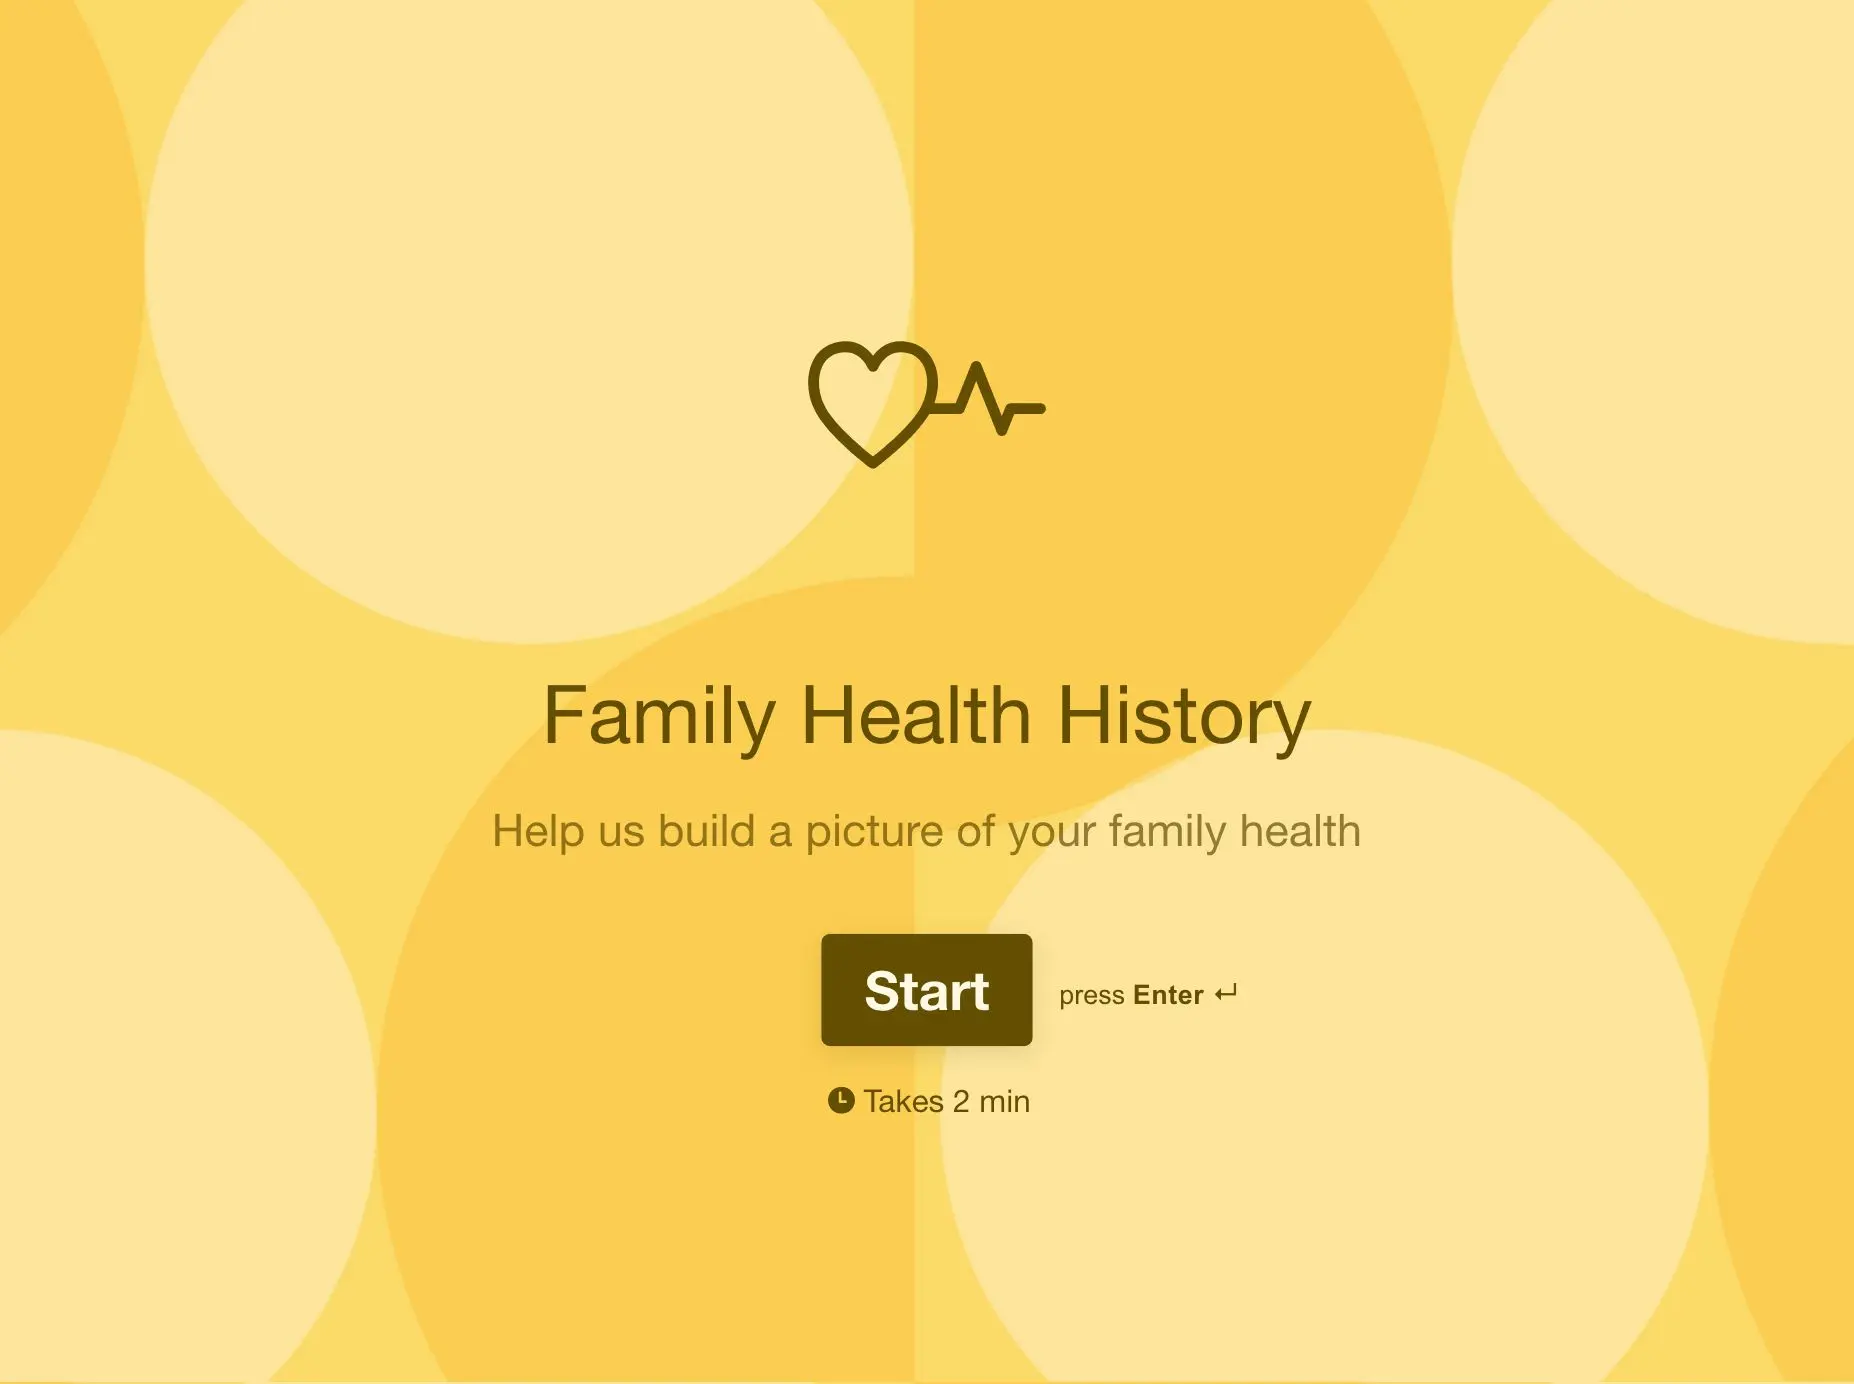 Family Health History Questionnaire Hero